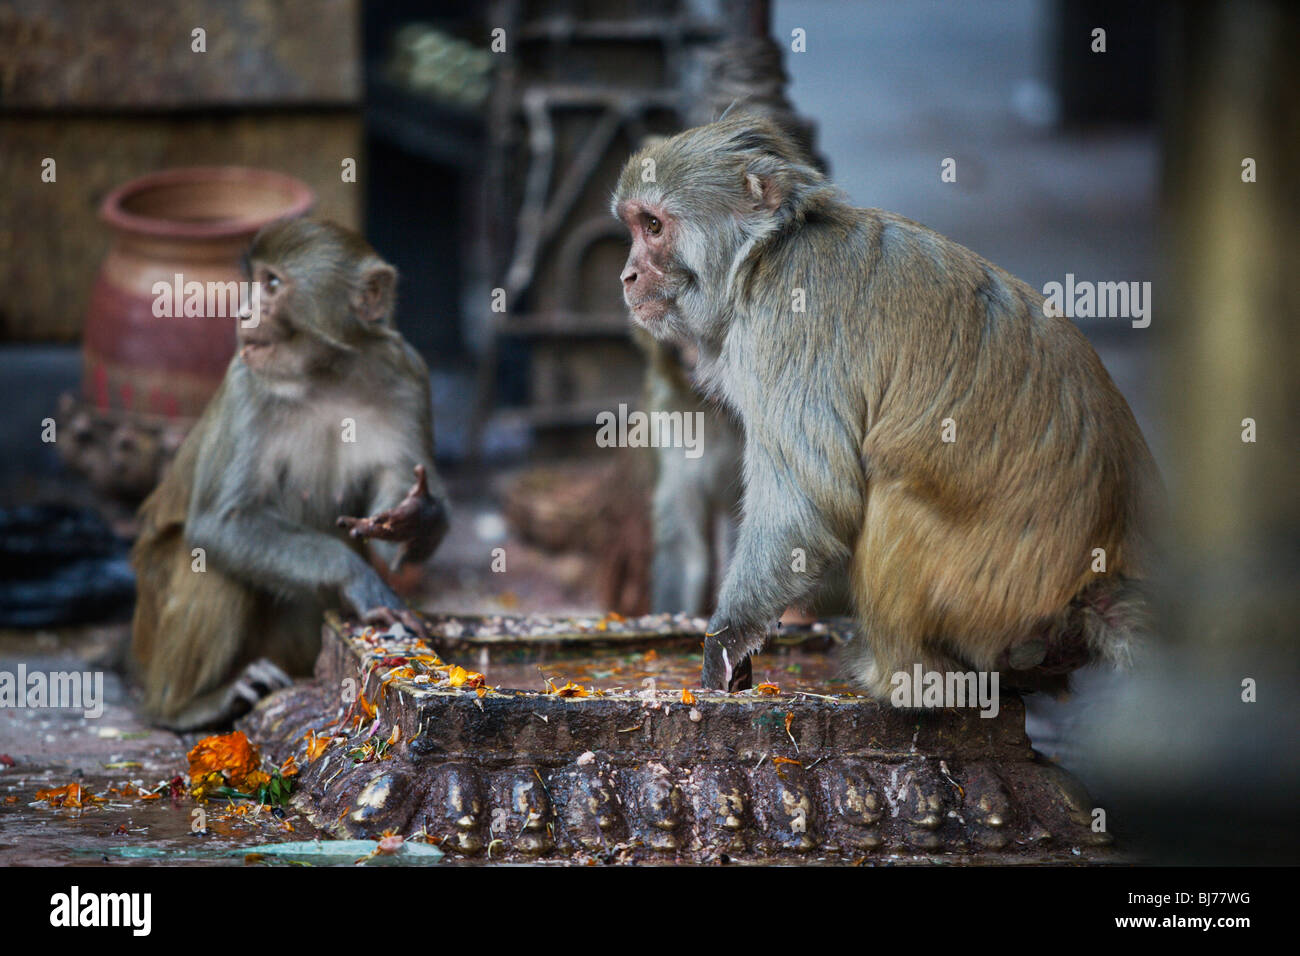 Monkeys eating offerings in Swayambhunath temple (Monkey temple), Kathmandu, Nepal. Stock Photo